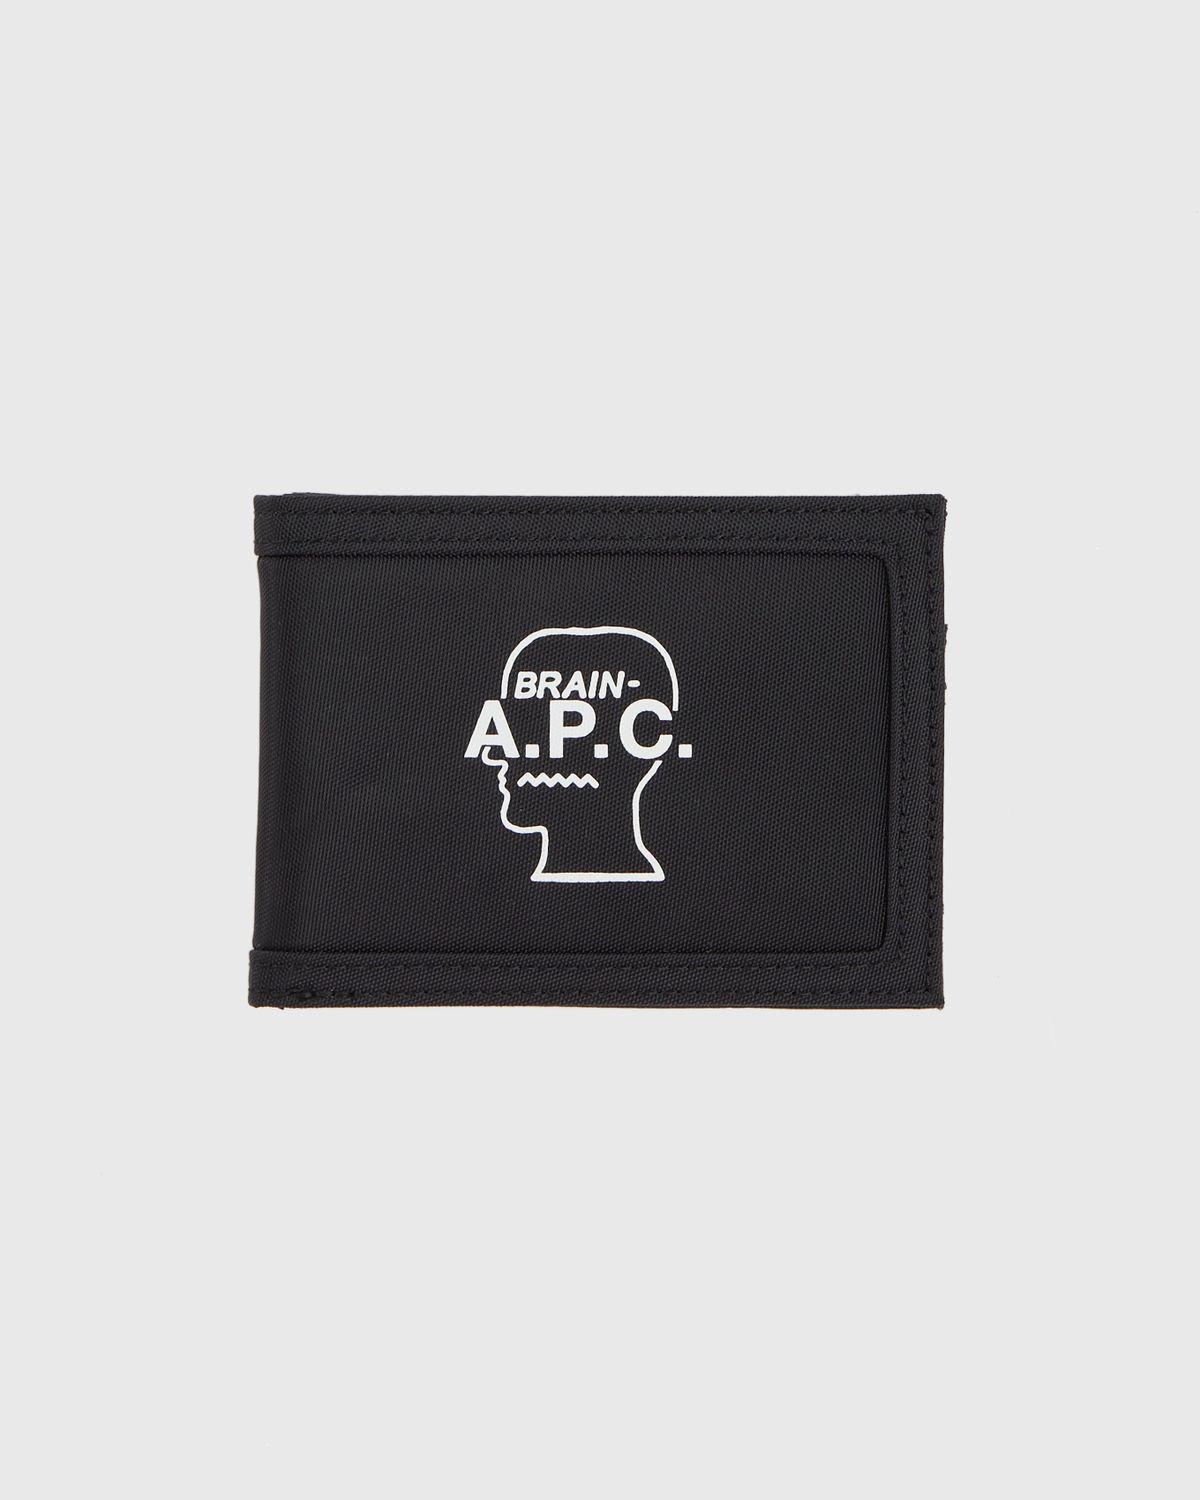 Brain Dead x A.P.C. – Black Porte-Cartes - Card Holders - Black - Image 1